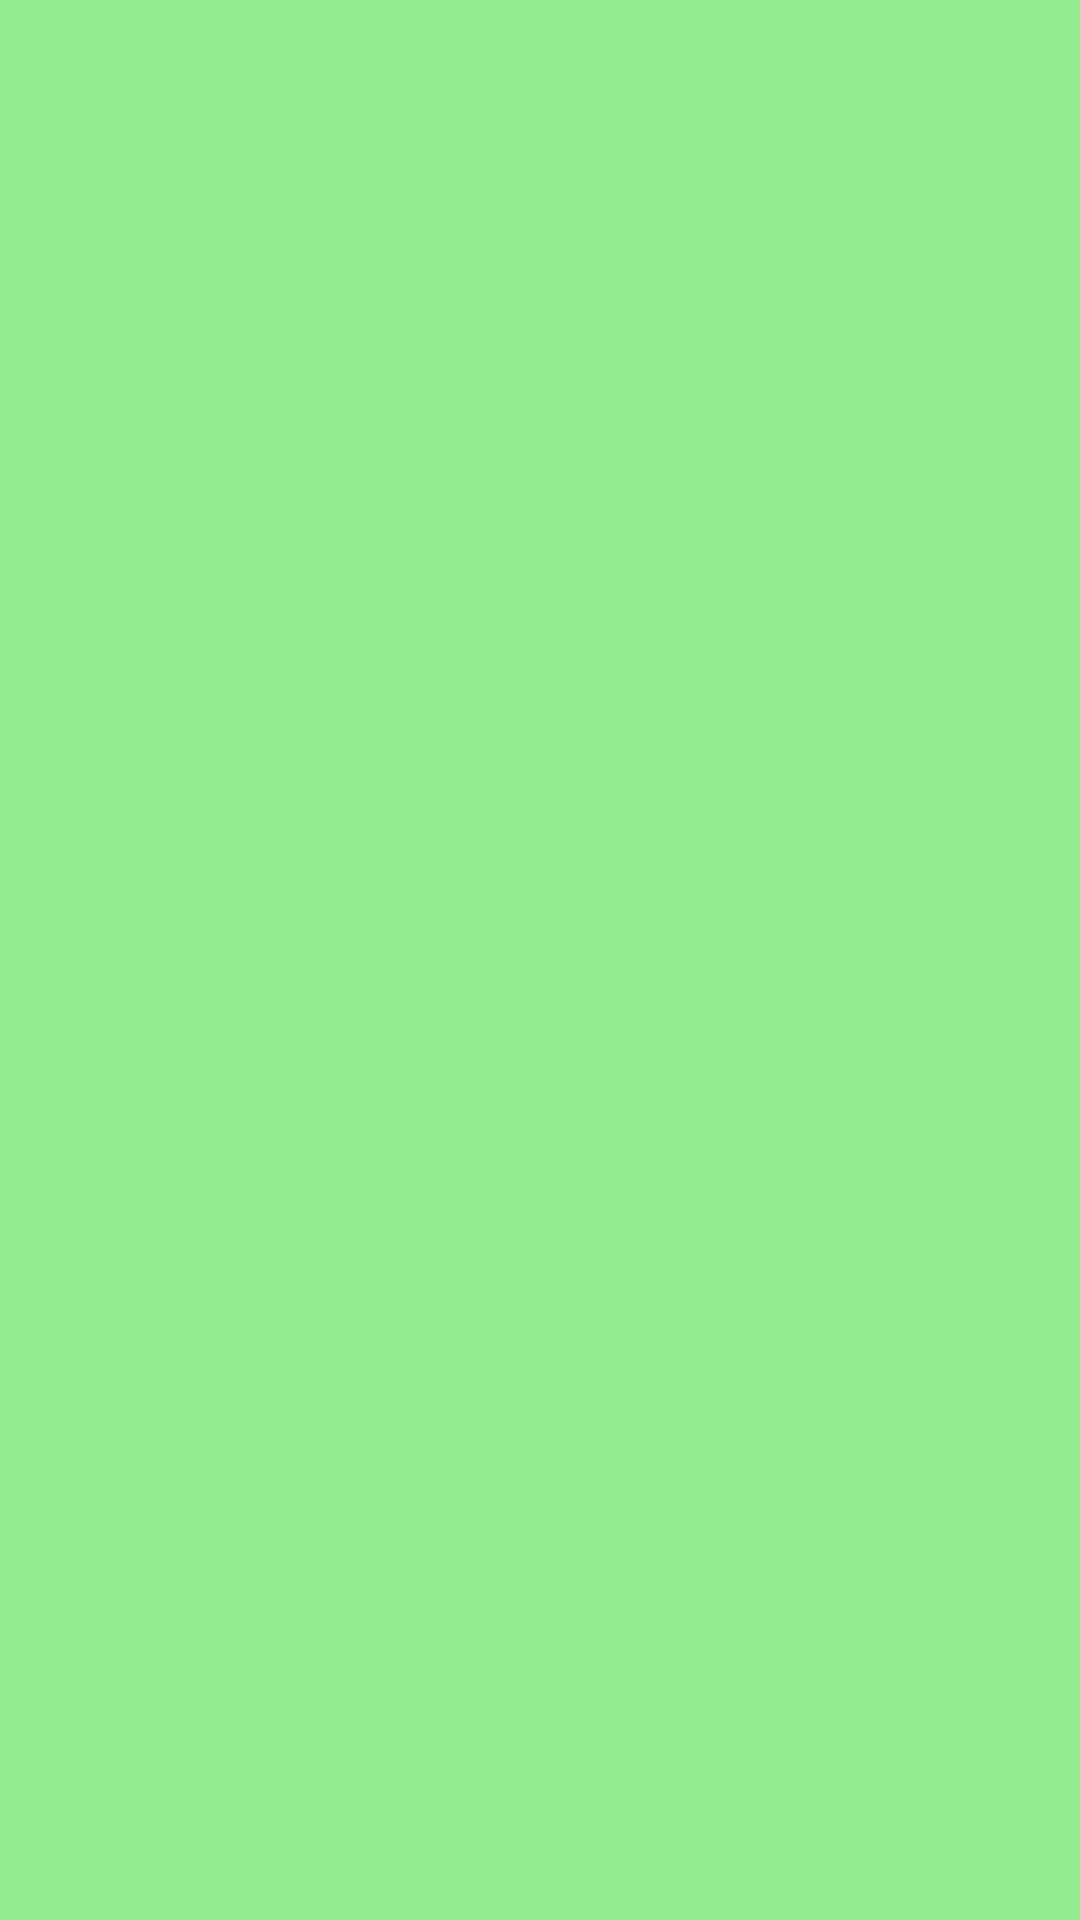 Light Green Plain Solid Color Background